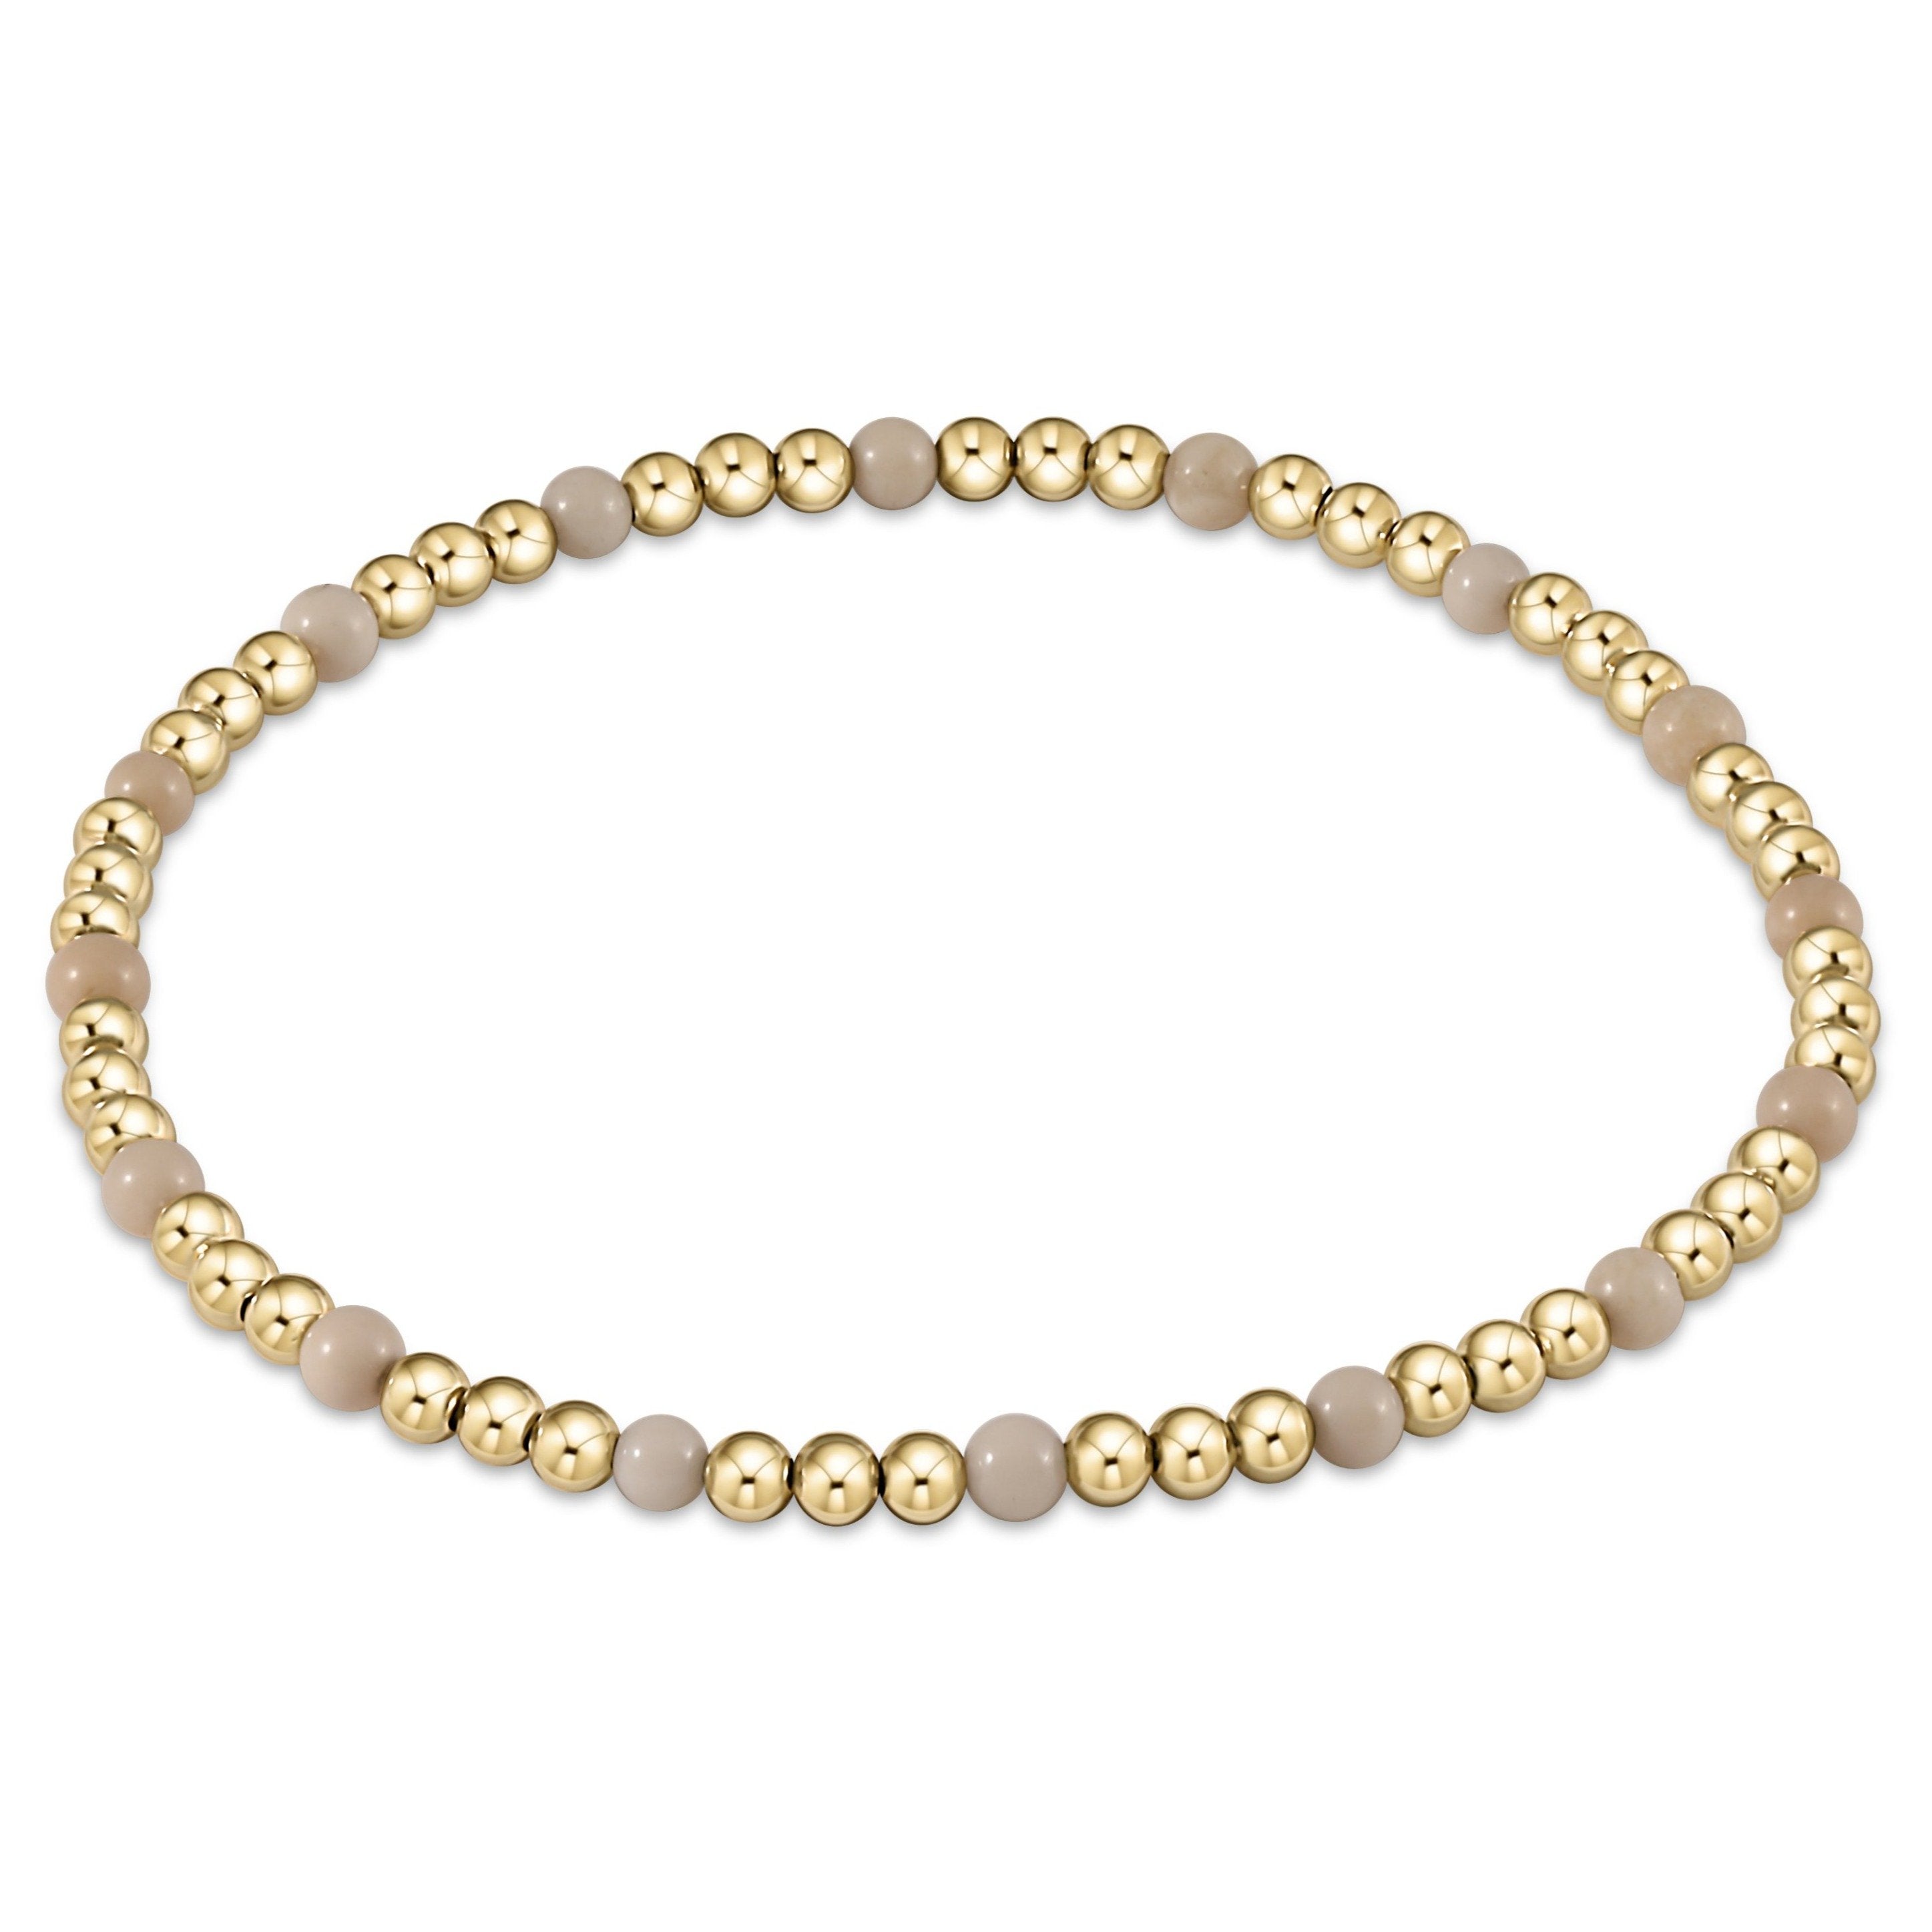 Sincerity Gold Bead Bracelet, 3mm - Riverstone